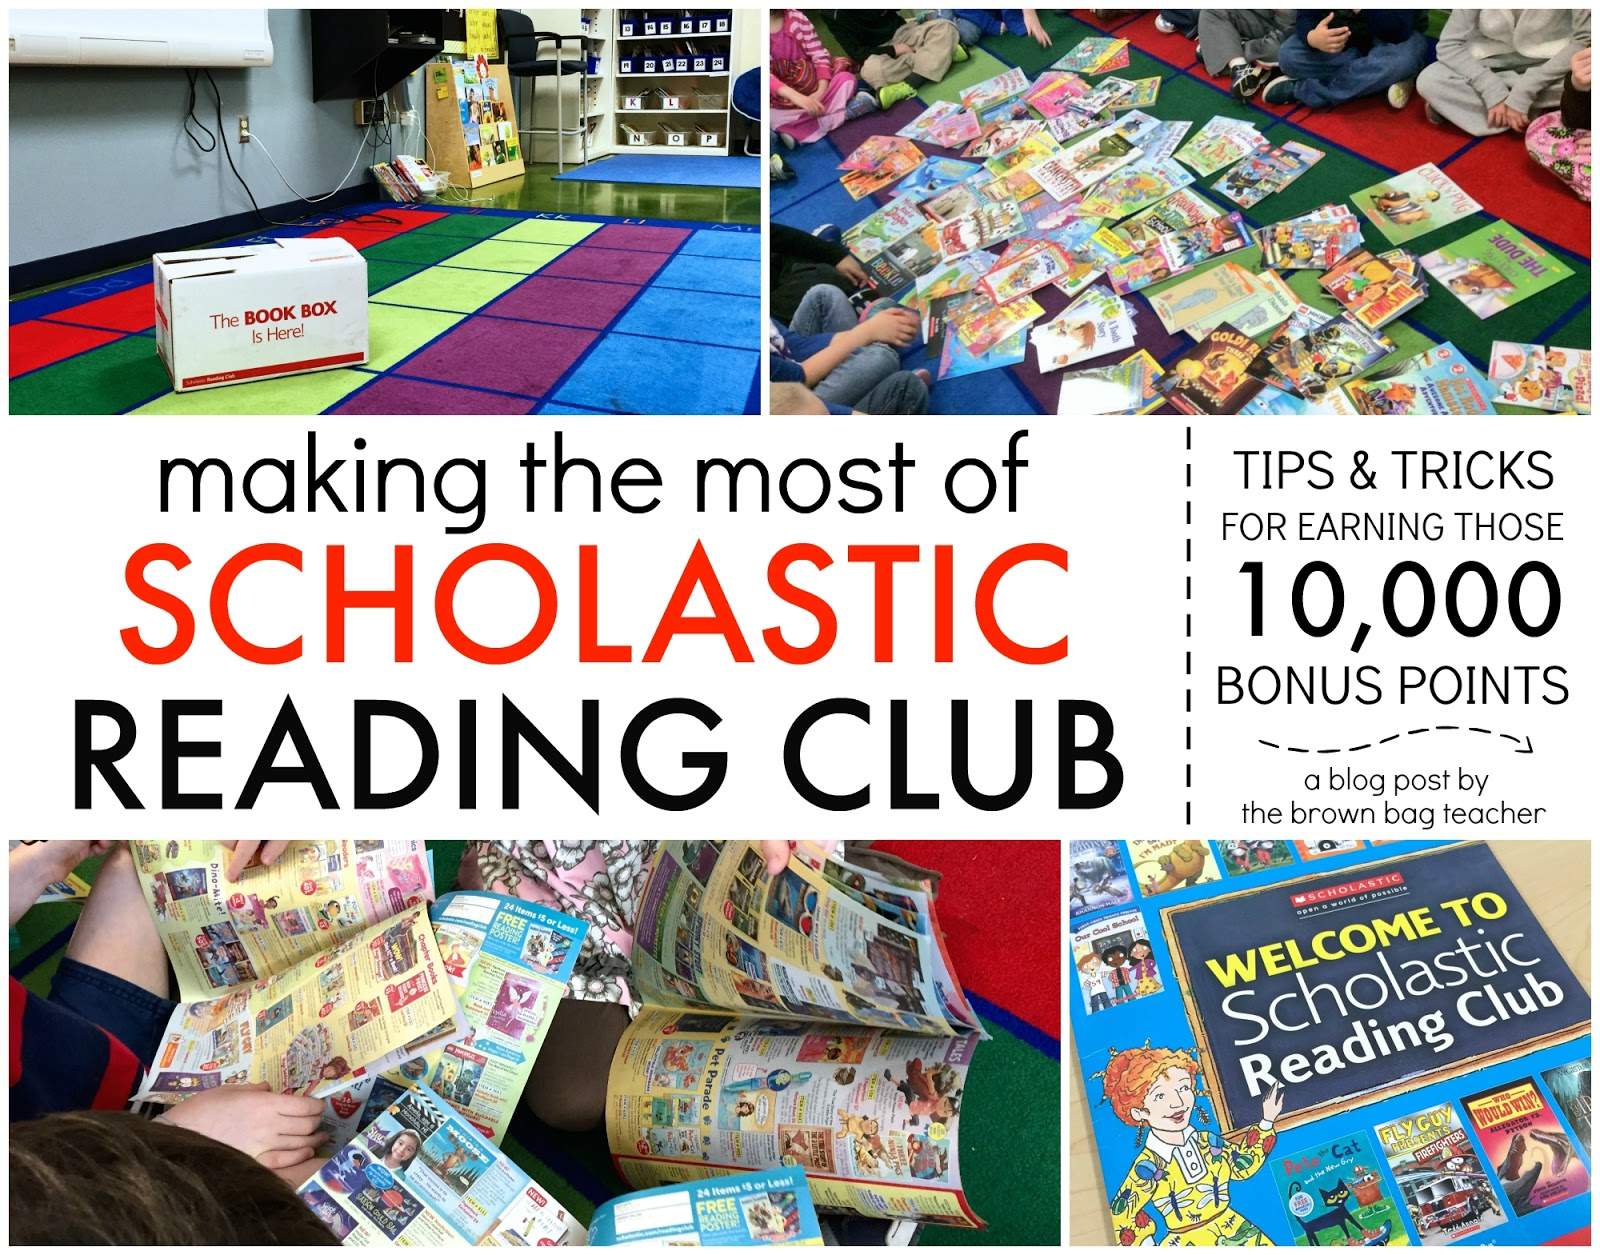 Scholastic Reading Club: Tips & Tricks